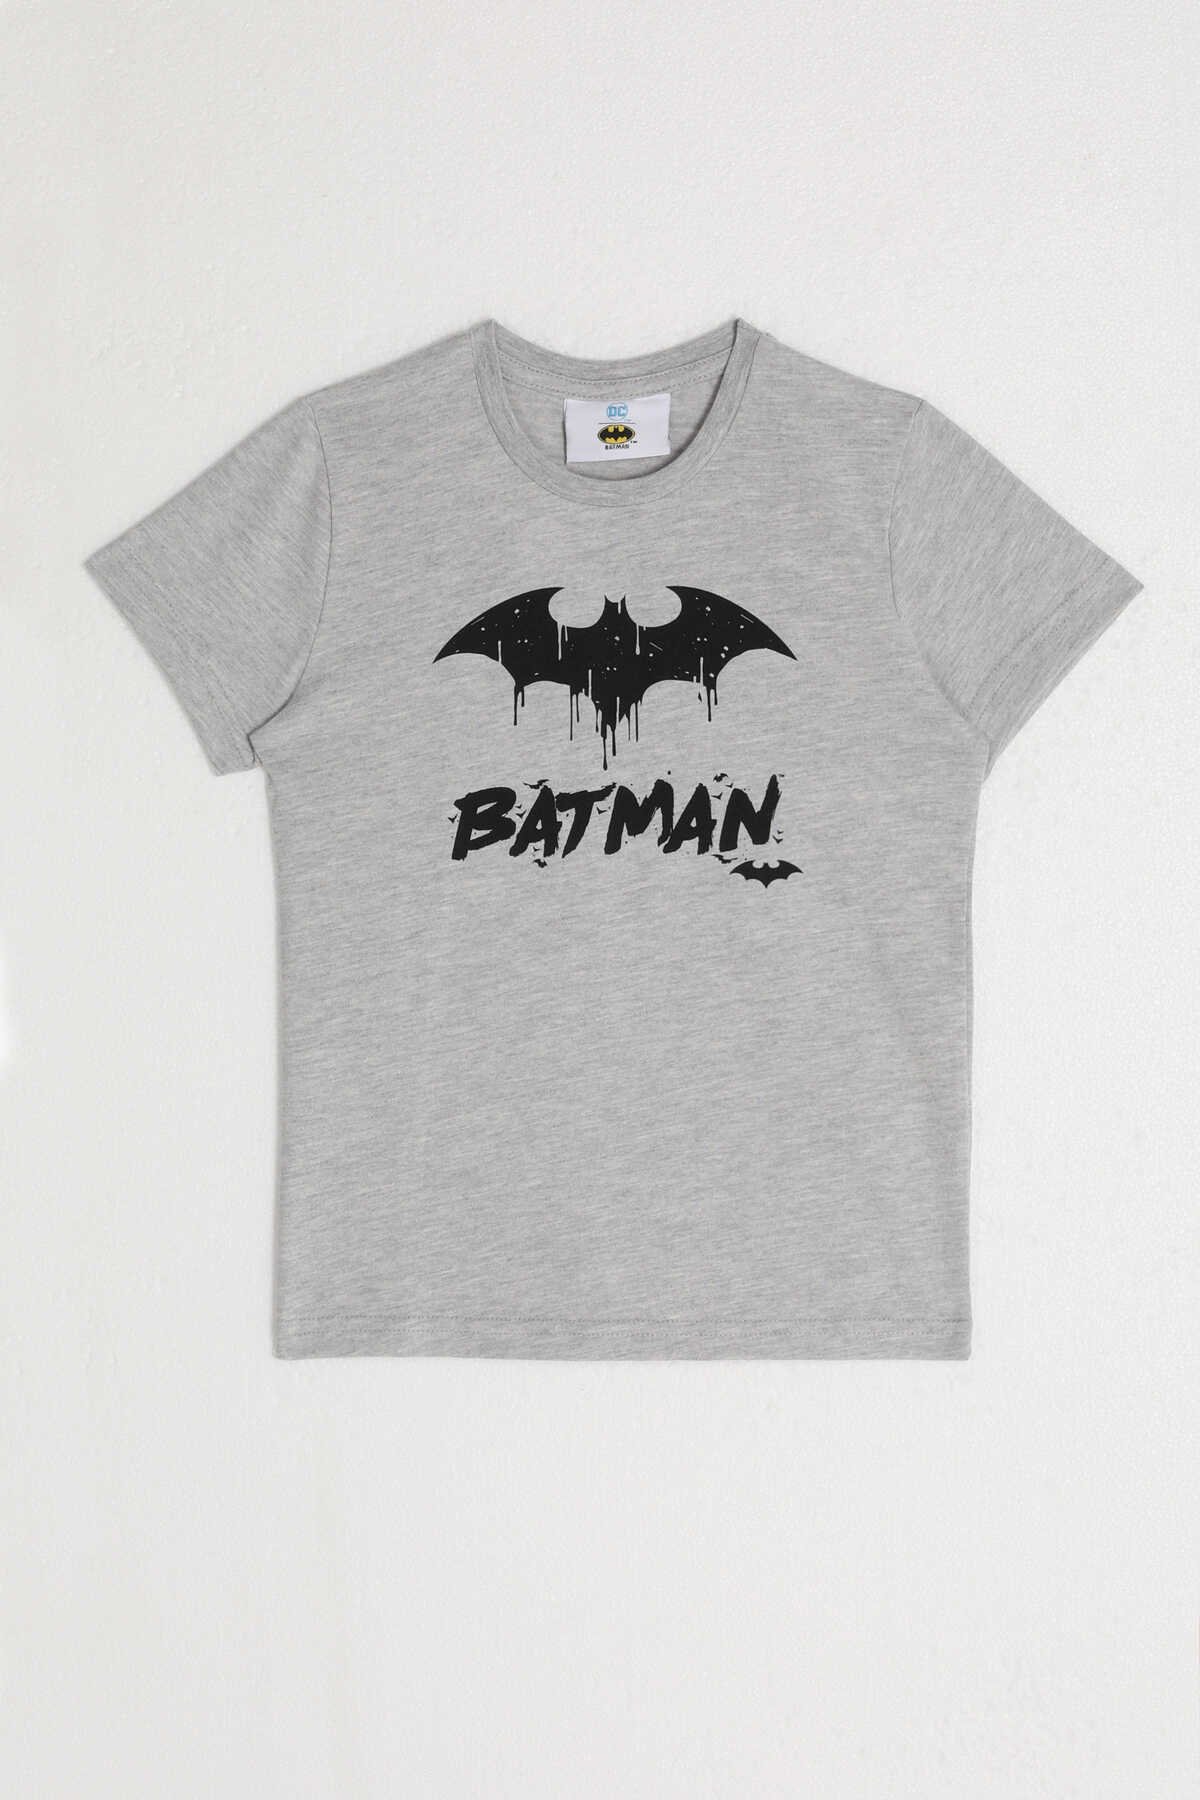 Batman - Batman L1578-2 Erkek Çocuk T-Shirt Gri / Melanj